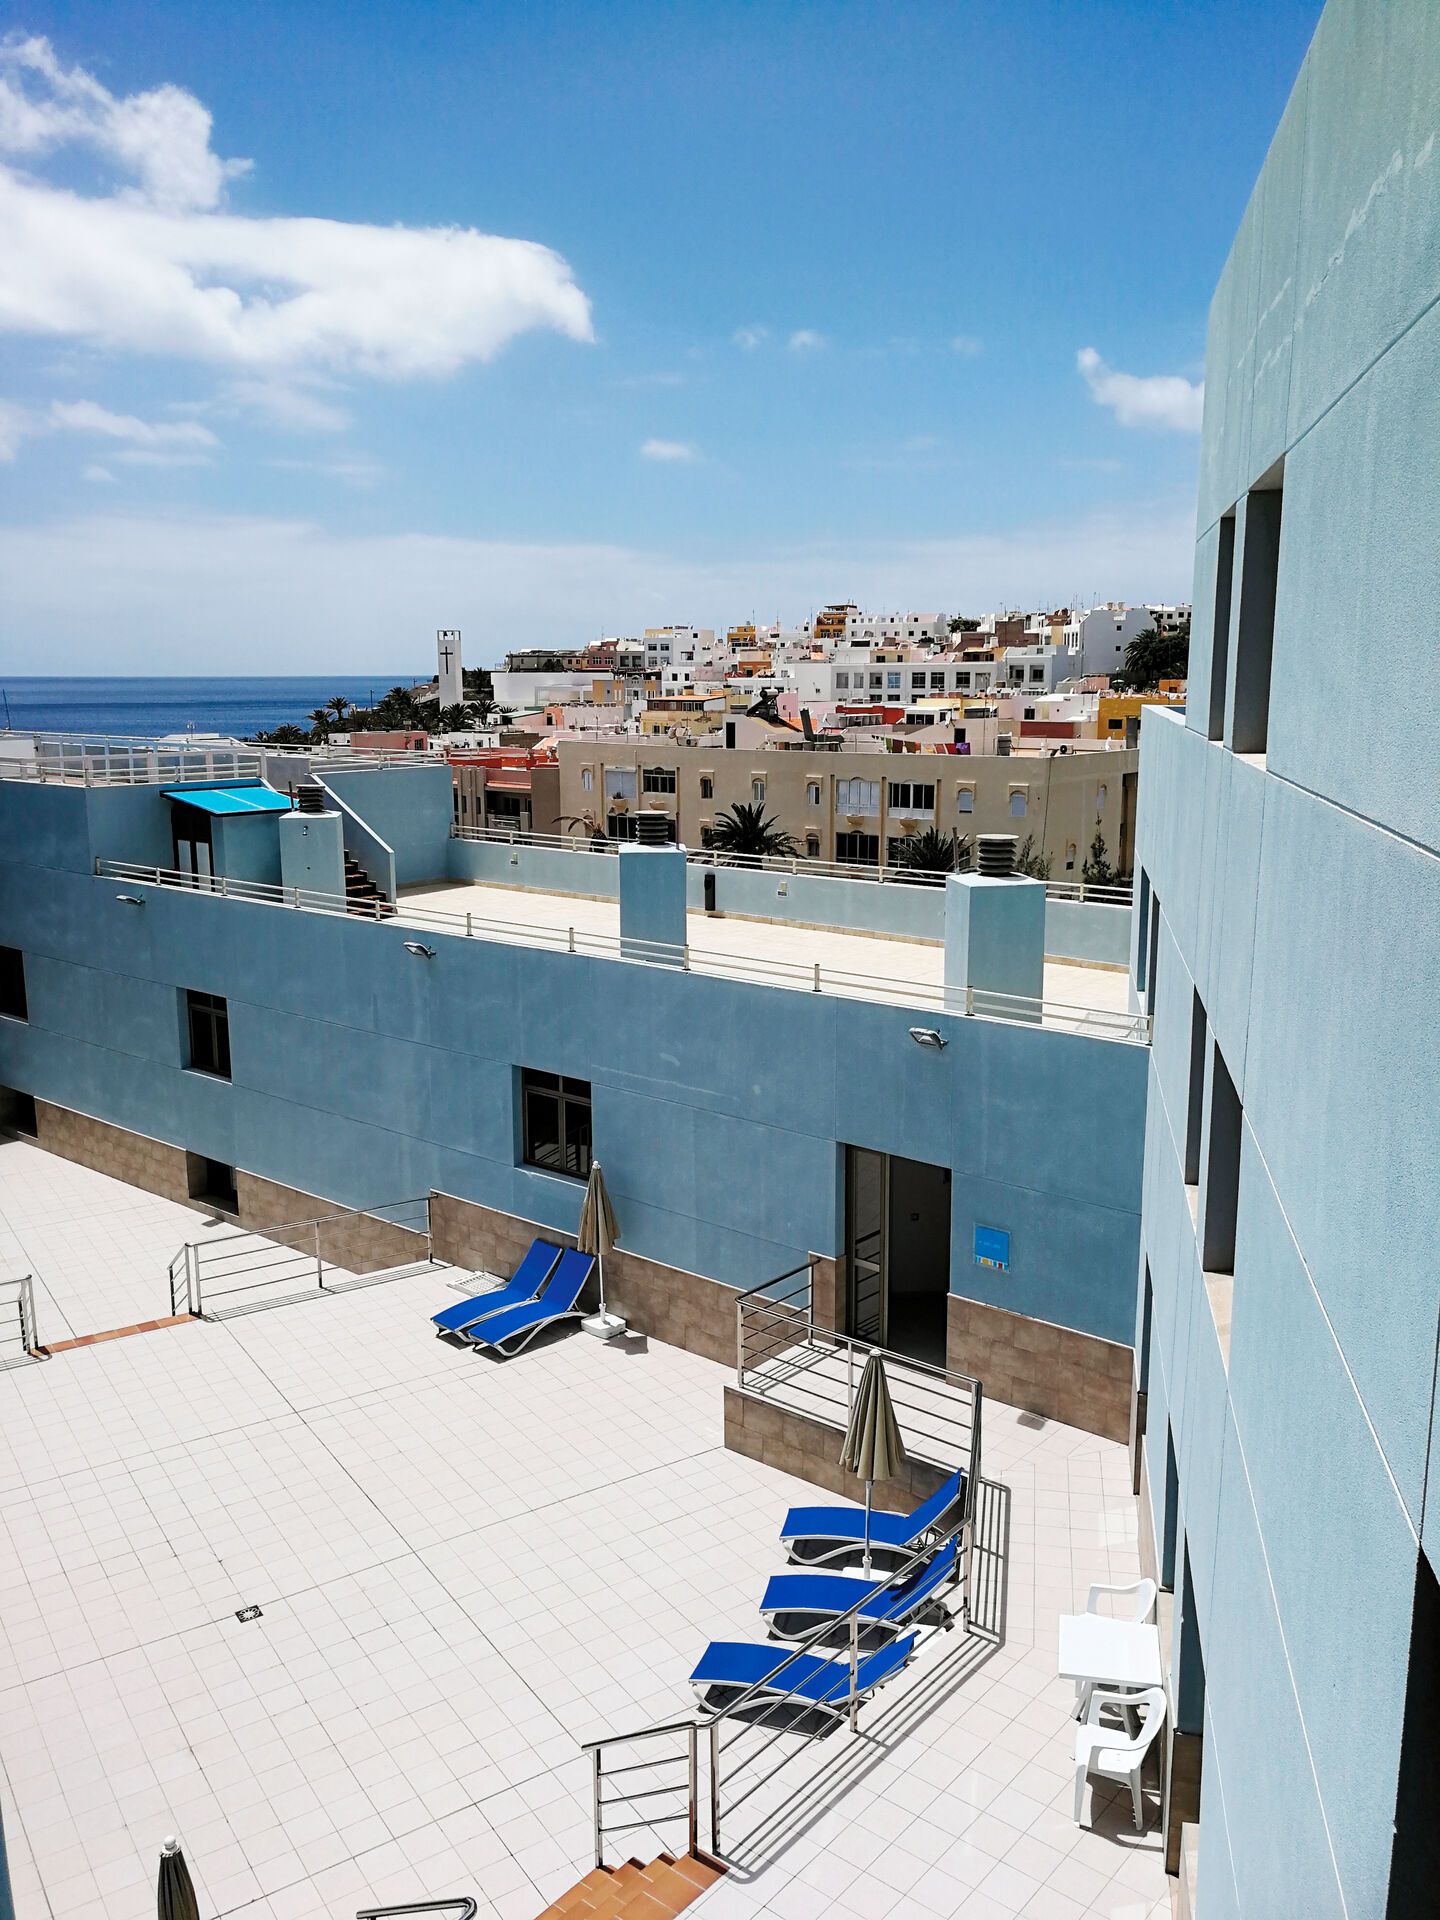 Canaries - Fuerteventura - Espagne - Hôtel TAO Morro Jable 3*